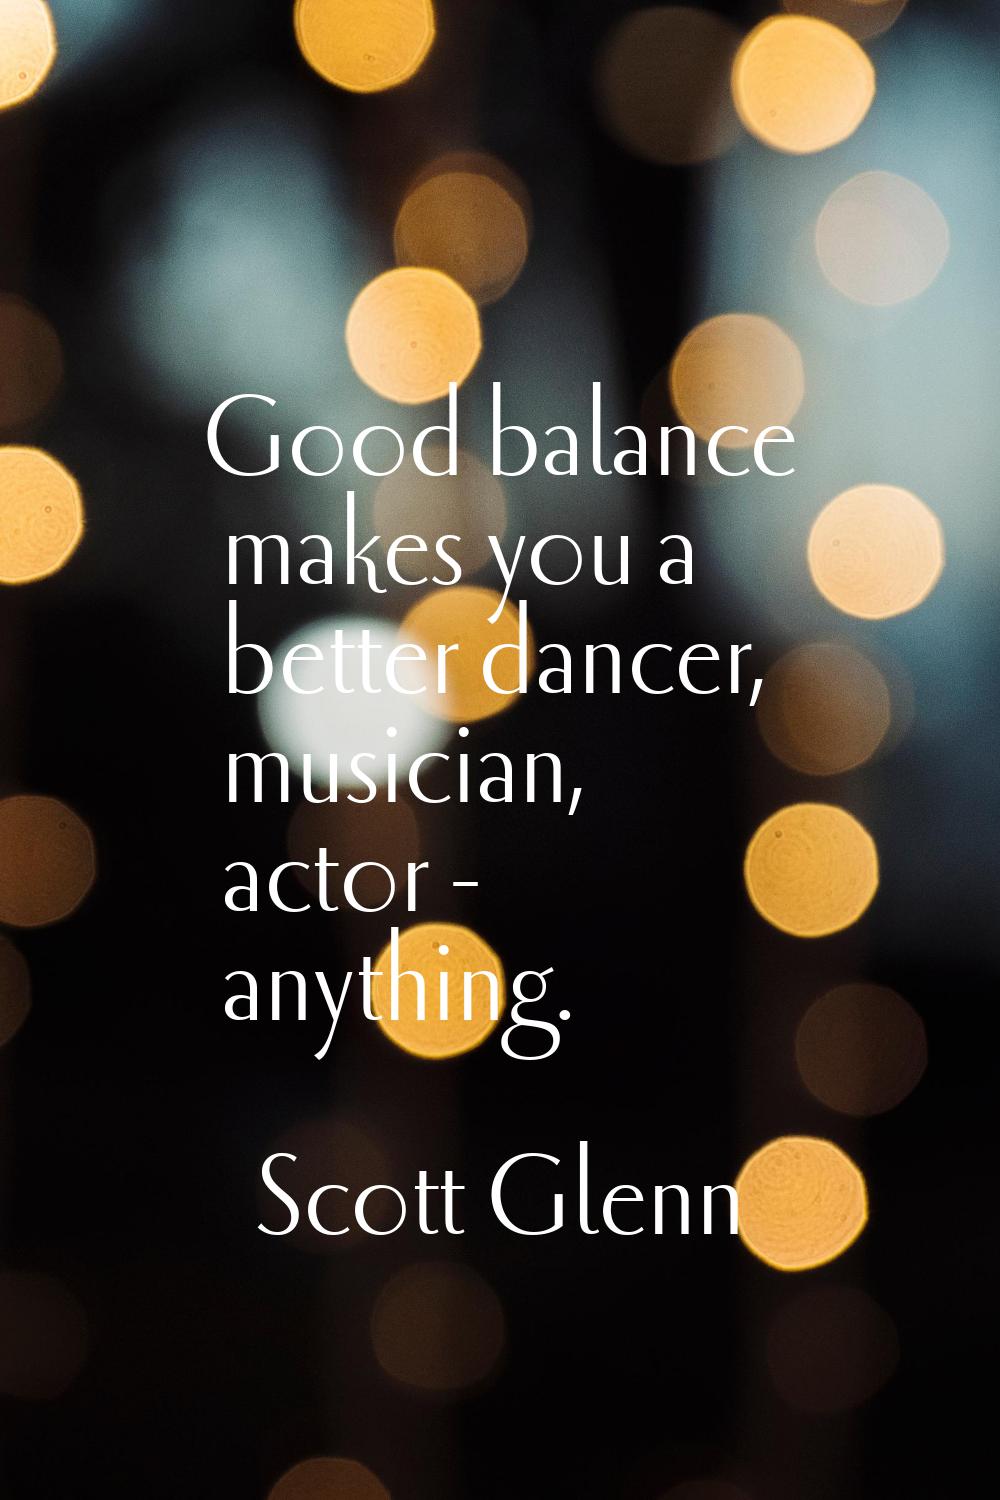 Good balance makes you a better dancer, musician, actor - anything.